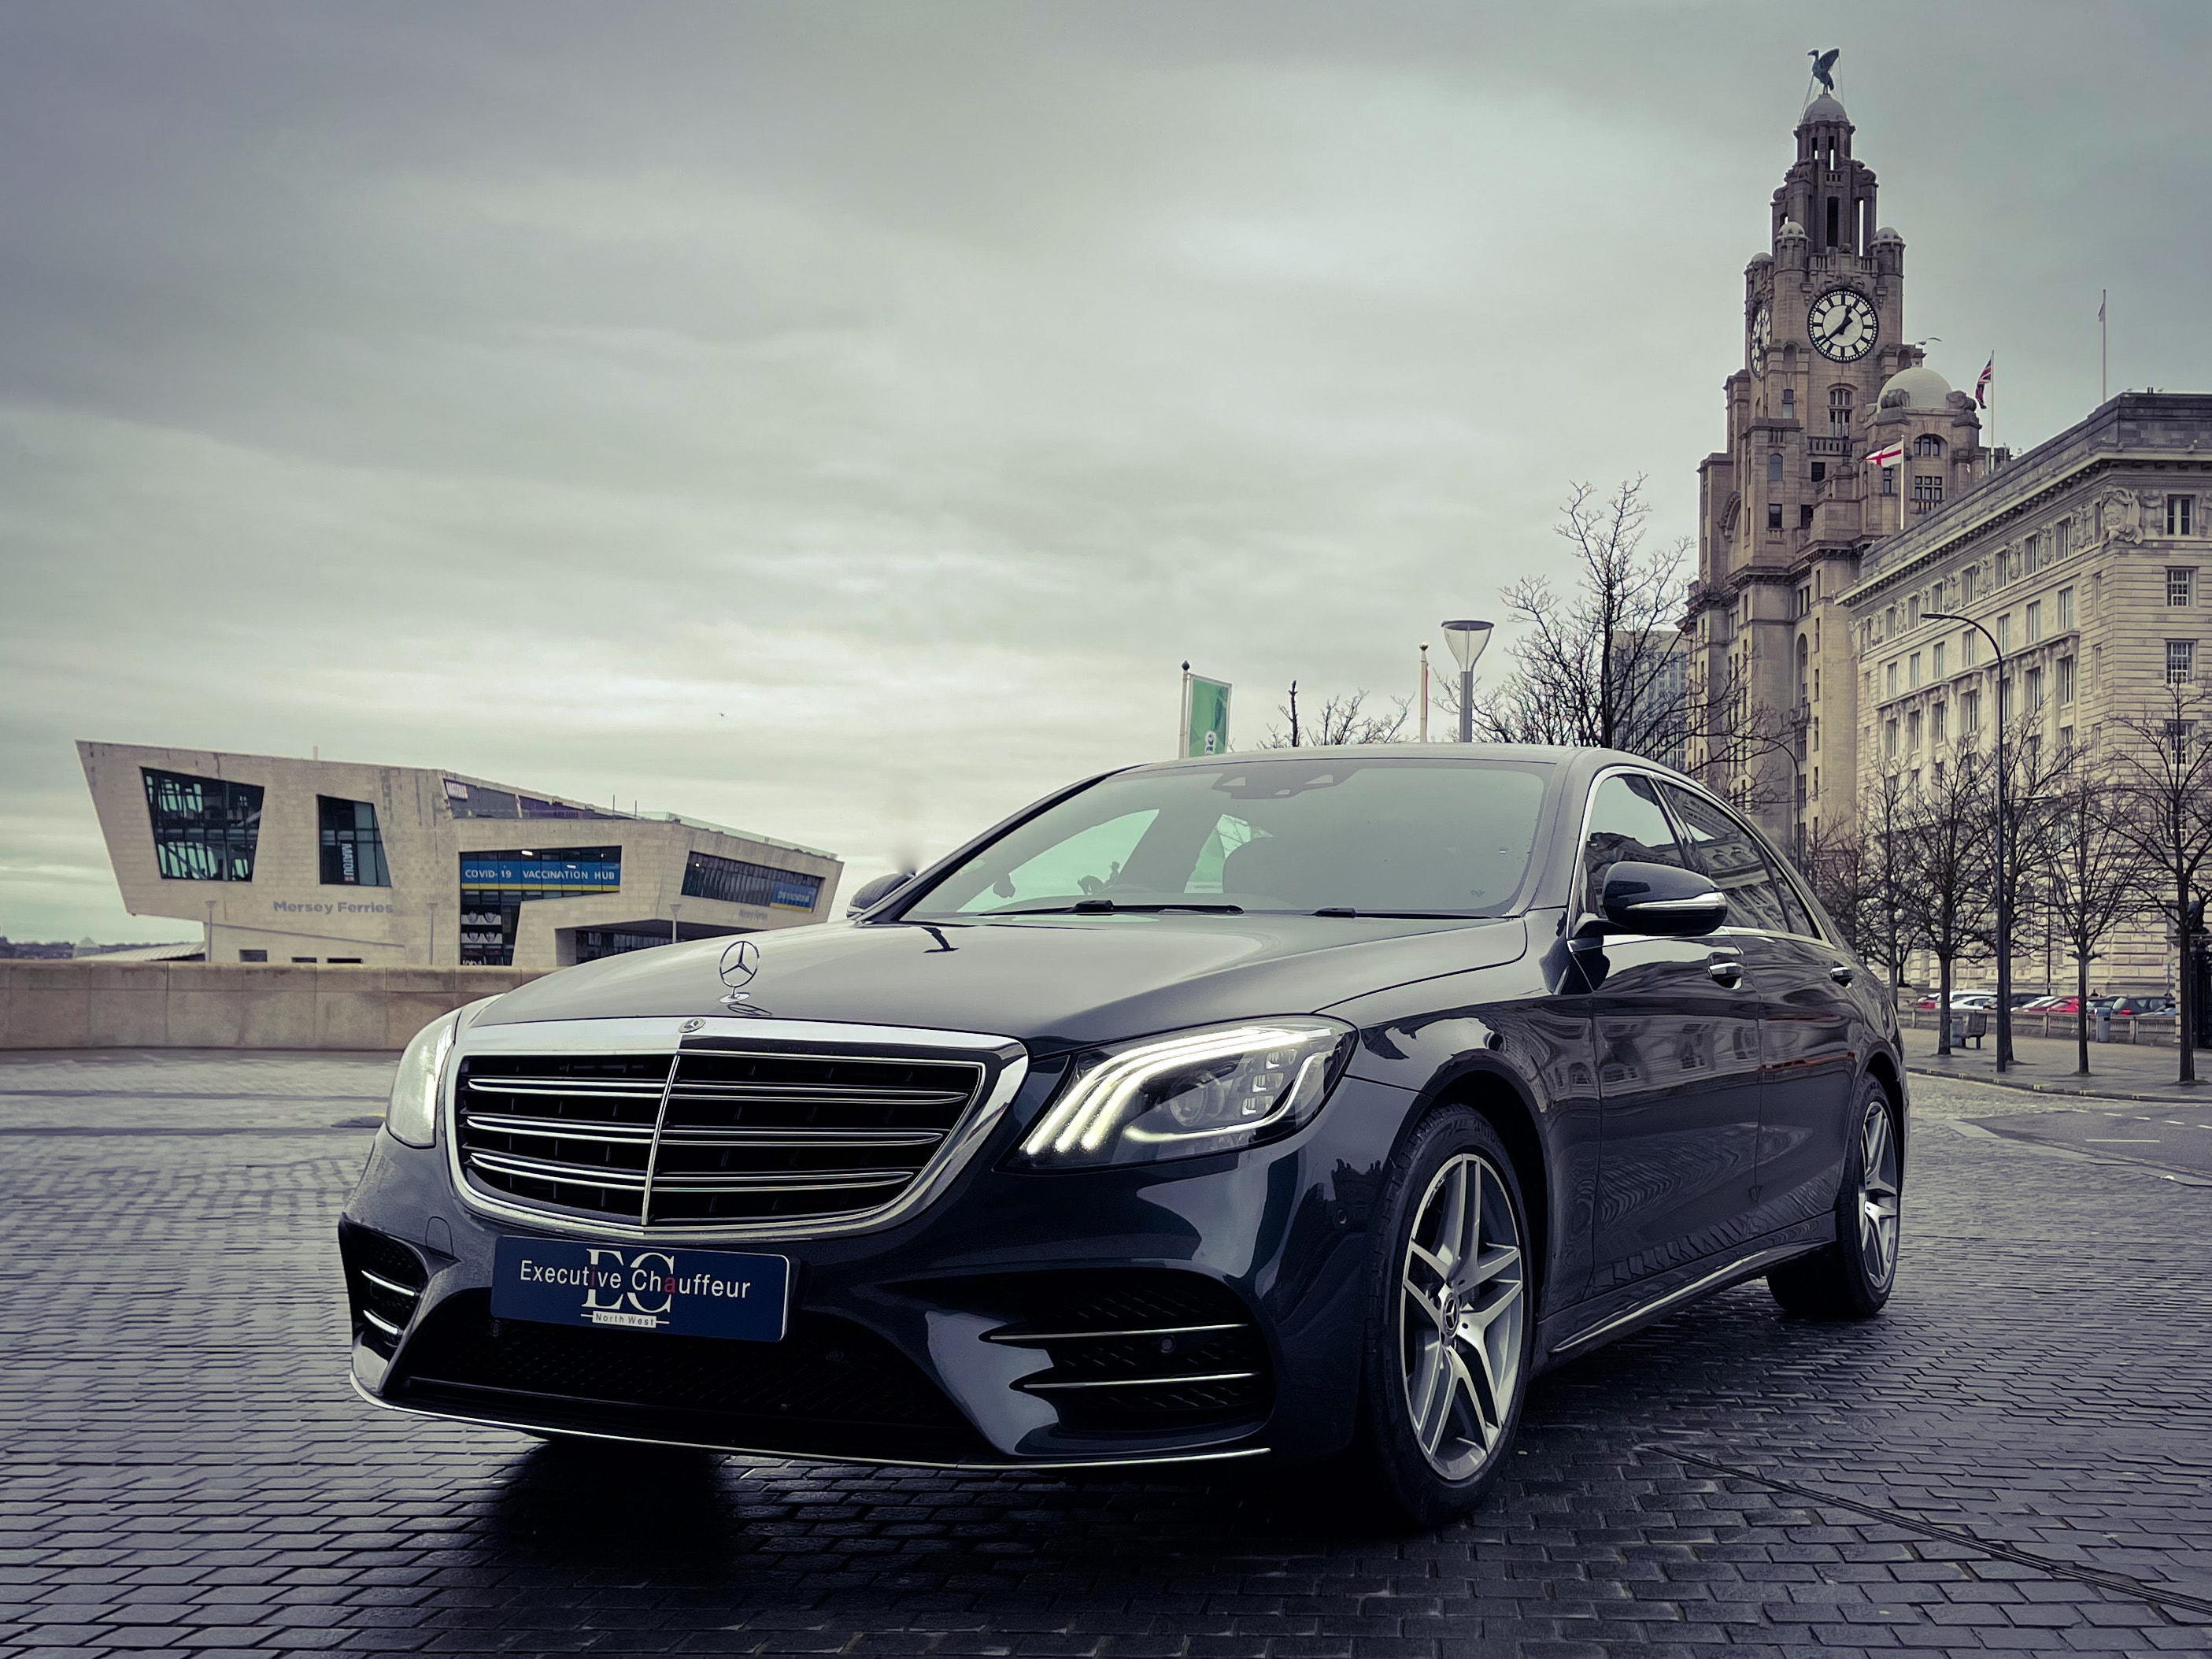 Luxury Chauffeur Driven Mercedes S Class